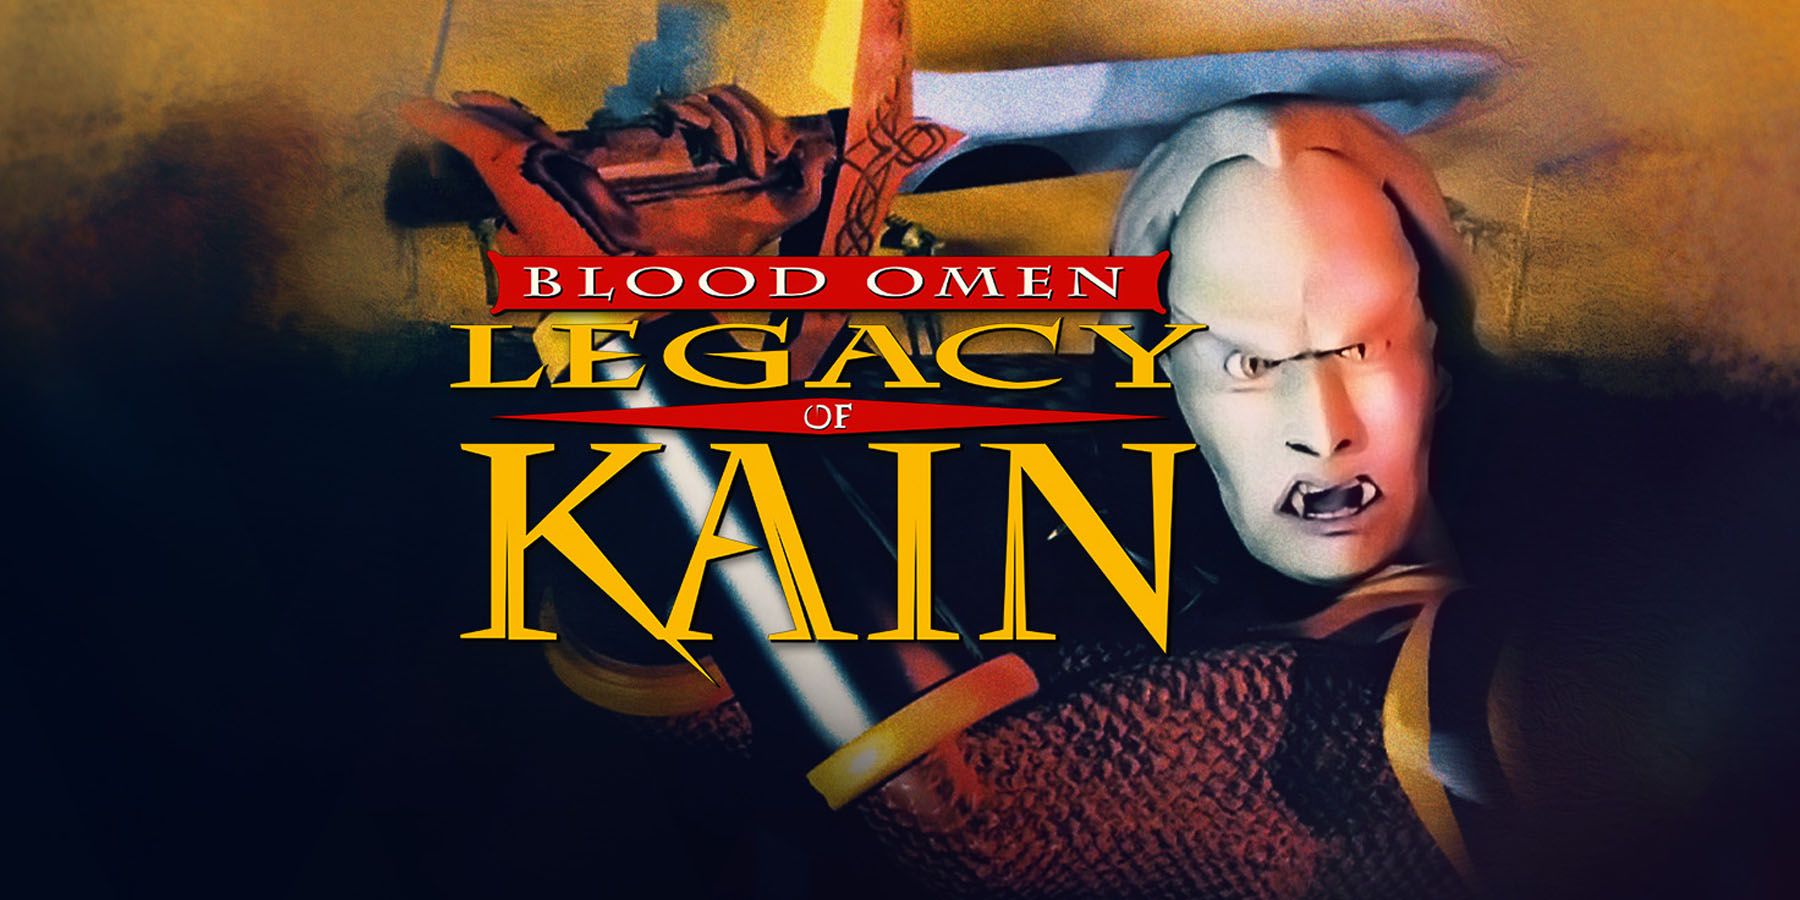 Blood Omen: Legacy of Kain arriva su PC moderno 25 anni dopo